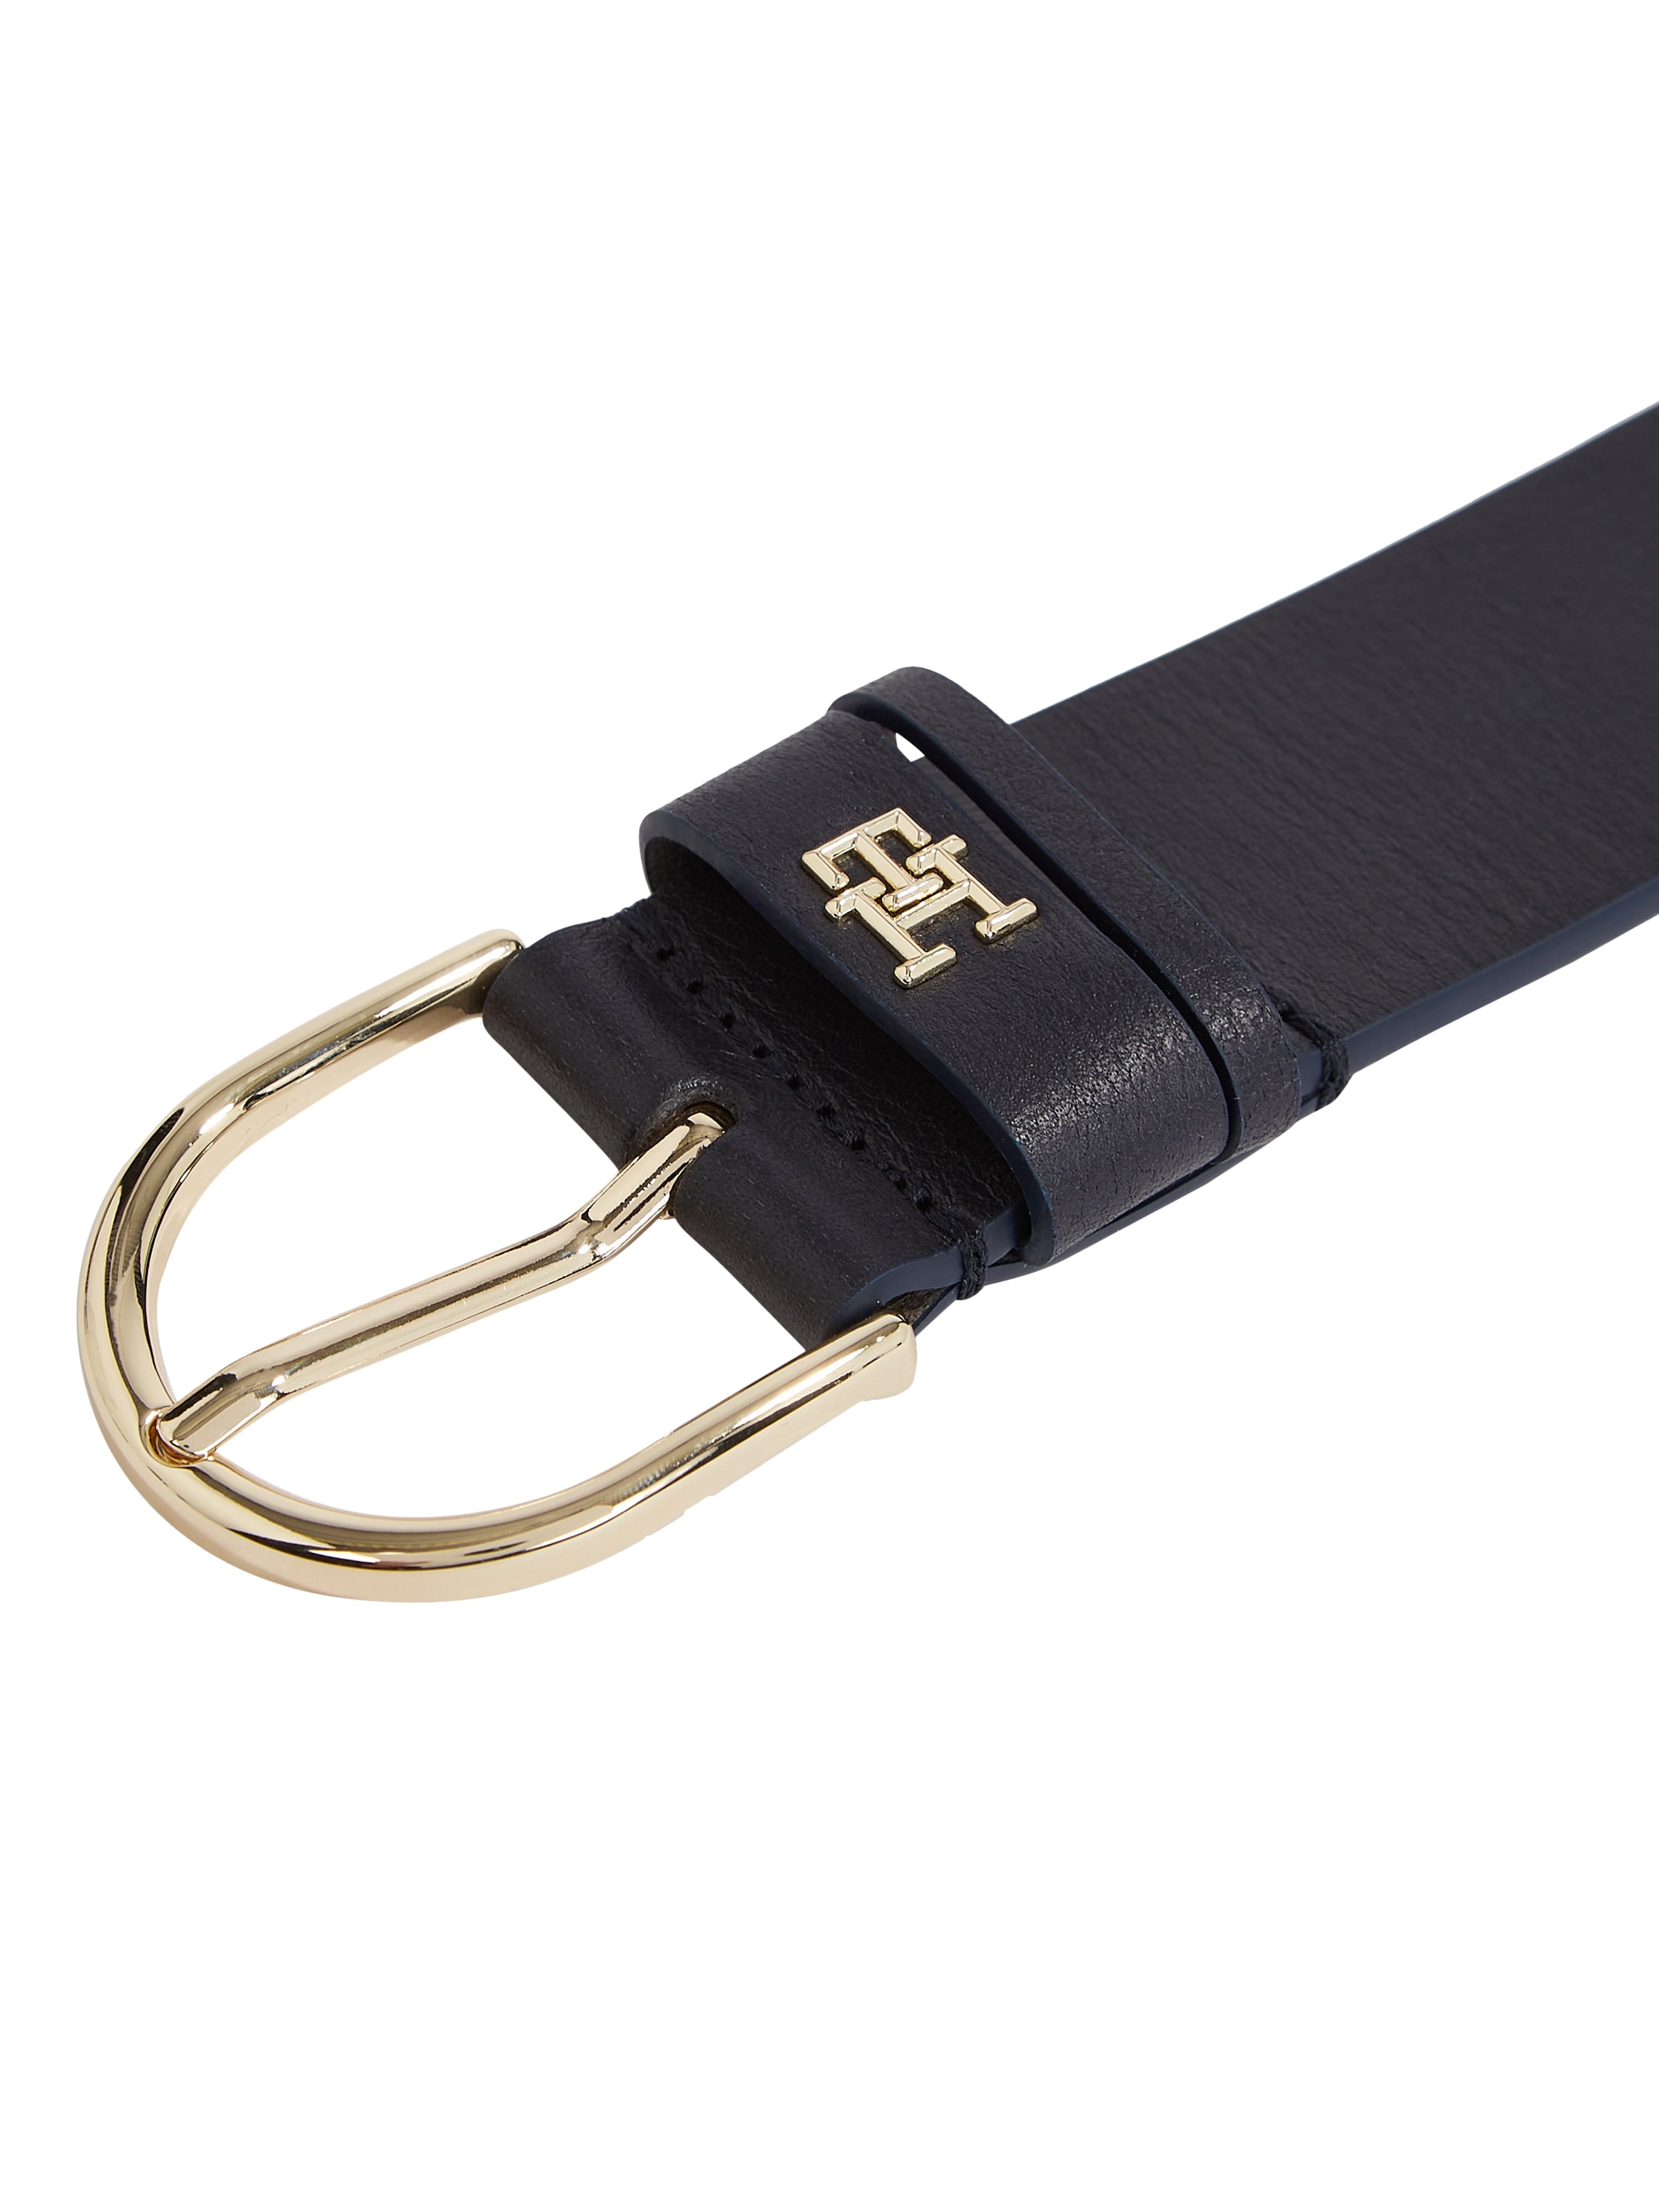 Tommy Hilfiger Ledergürtel, mit TH-Monogramm-Emblem (goldene Logo-Schnalle)  kaufen | I\'m walking